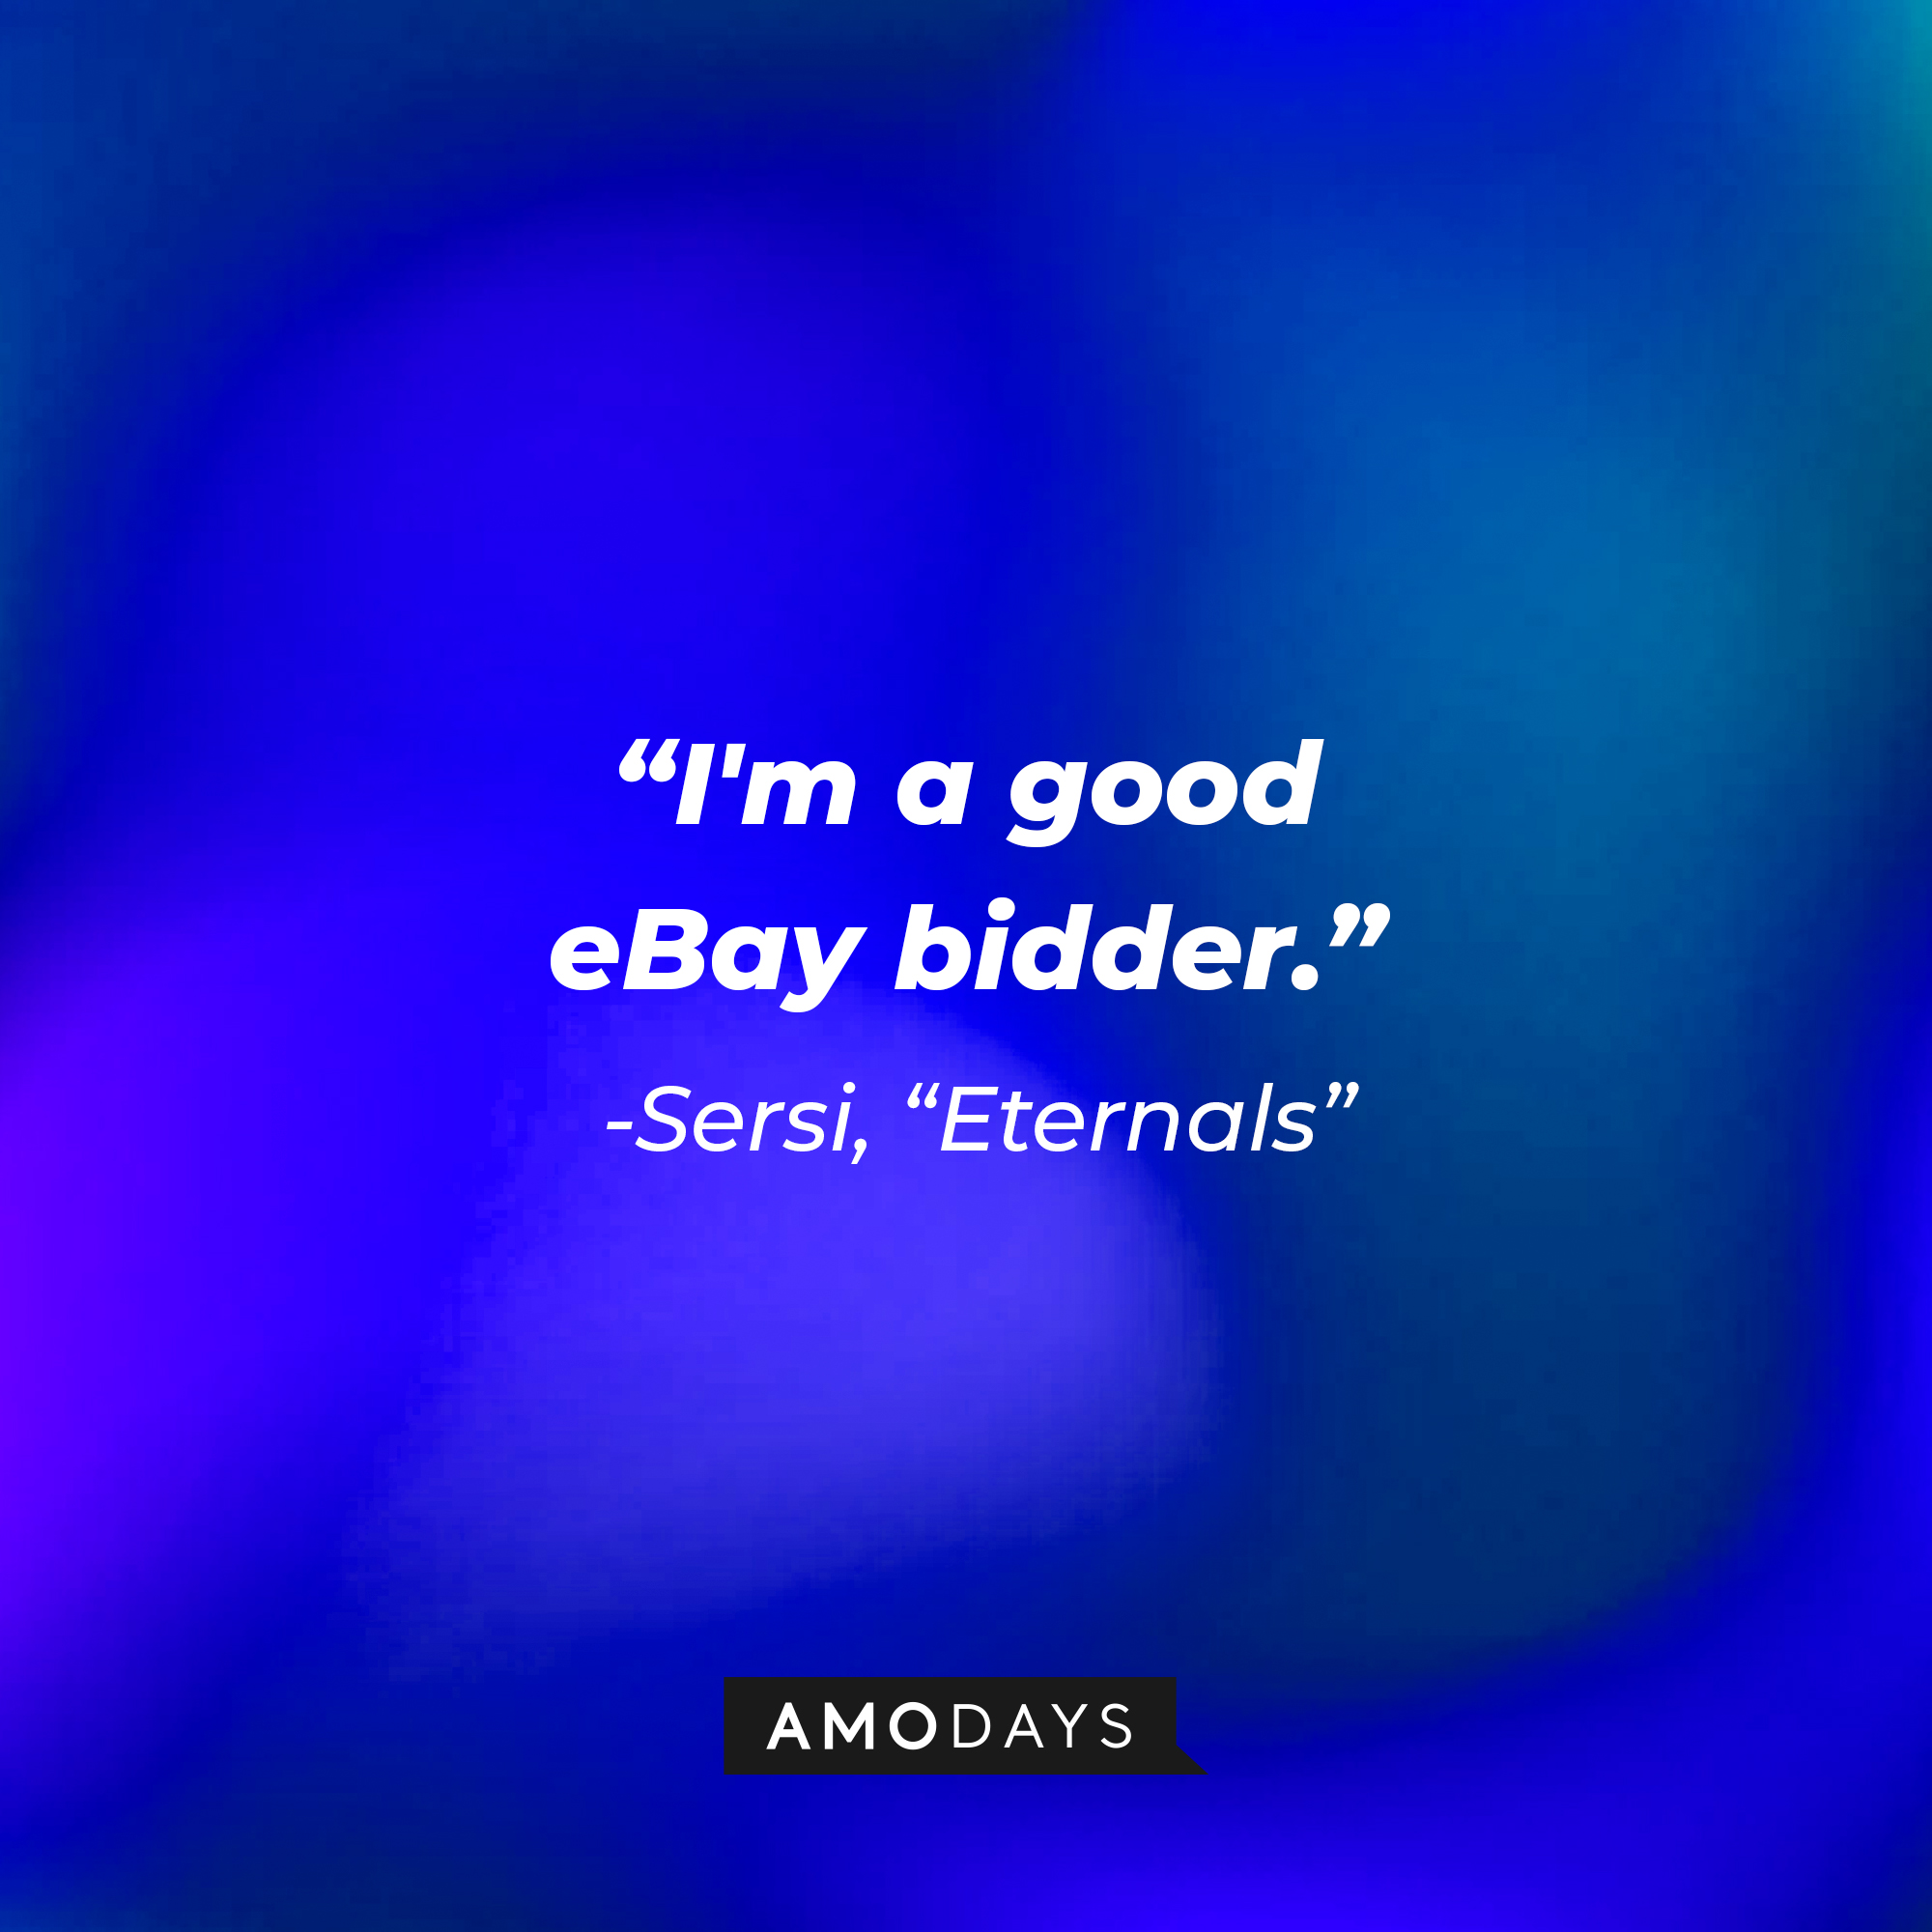 Sersi’s quote: "I'm a good eBay bidder." | Image: AmoDays